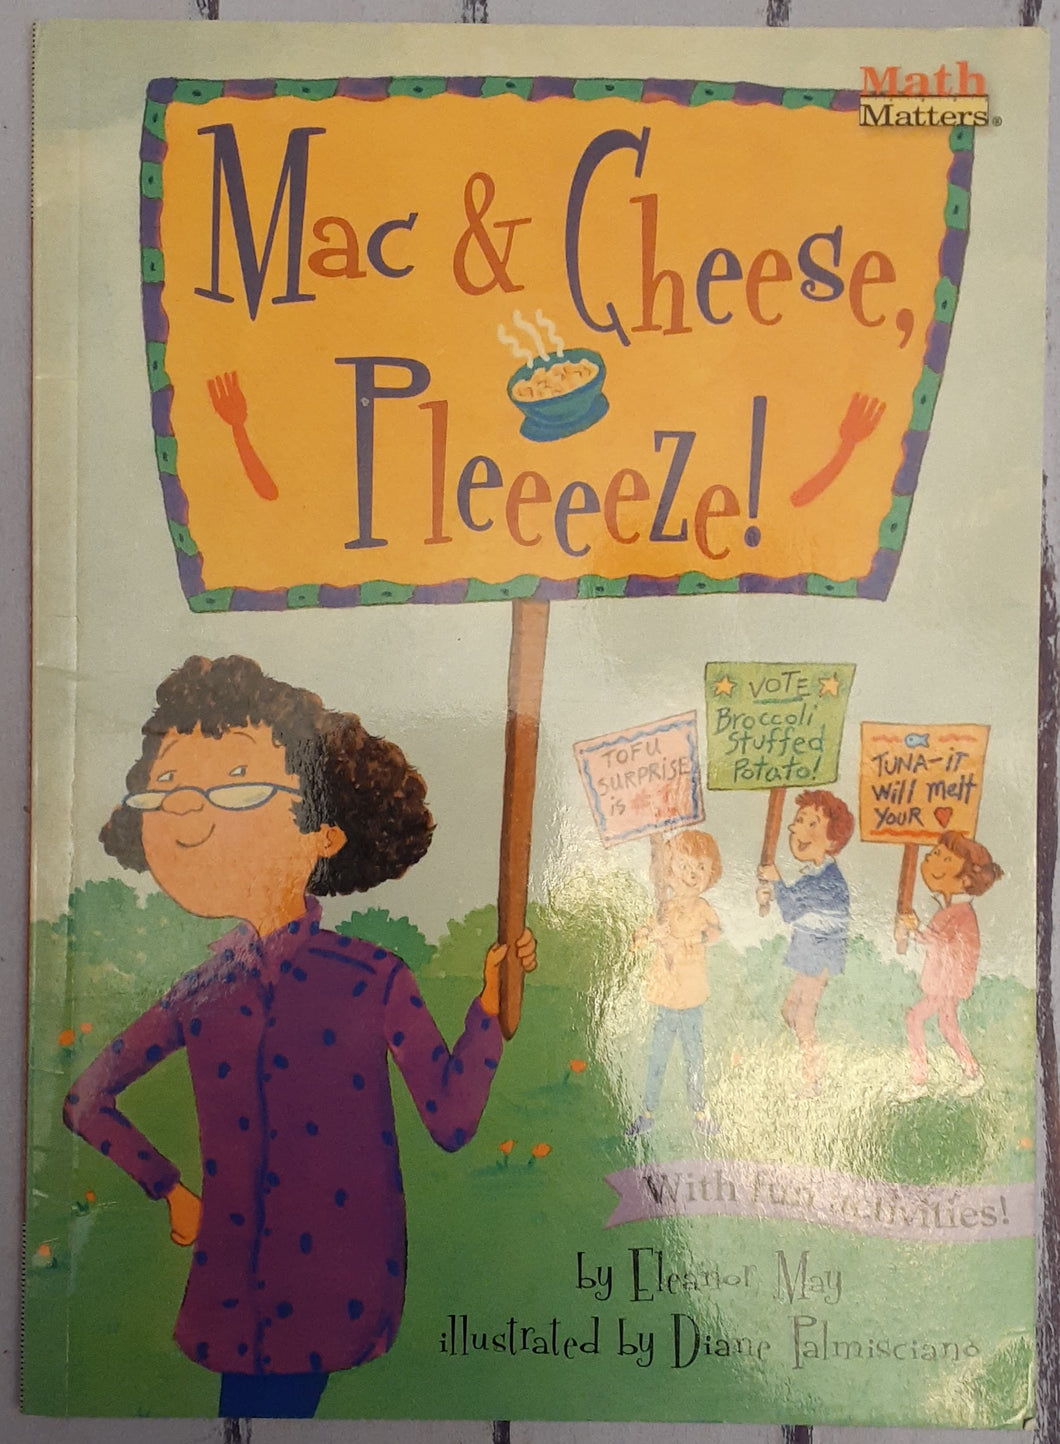 Mac & Cheese, Pleeeeze!